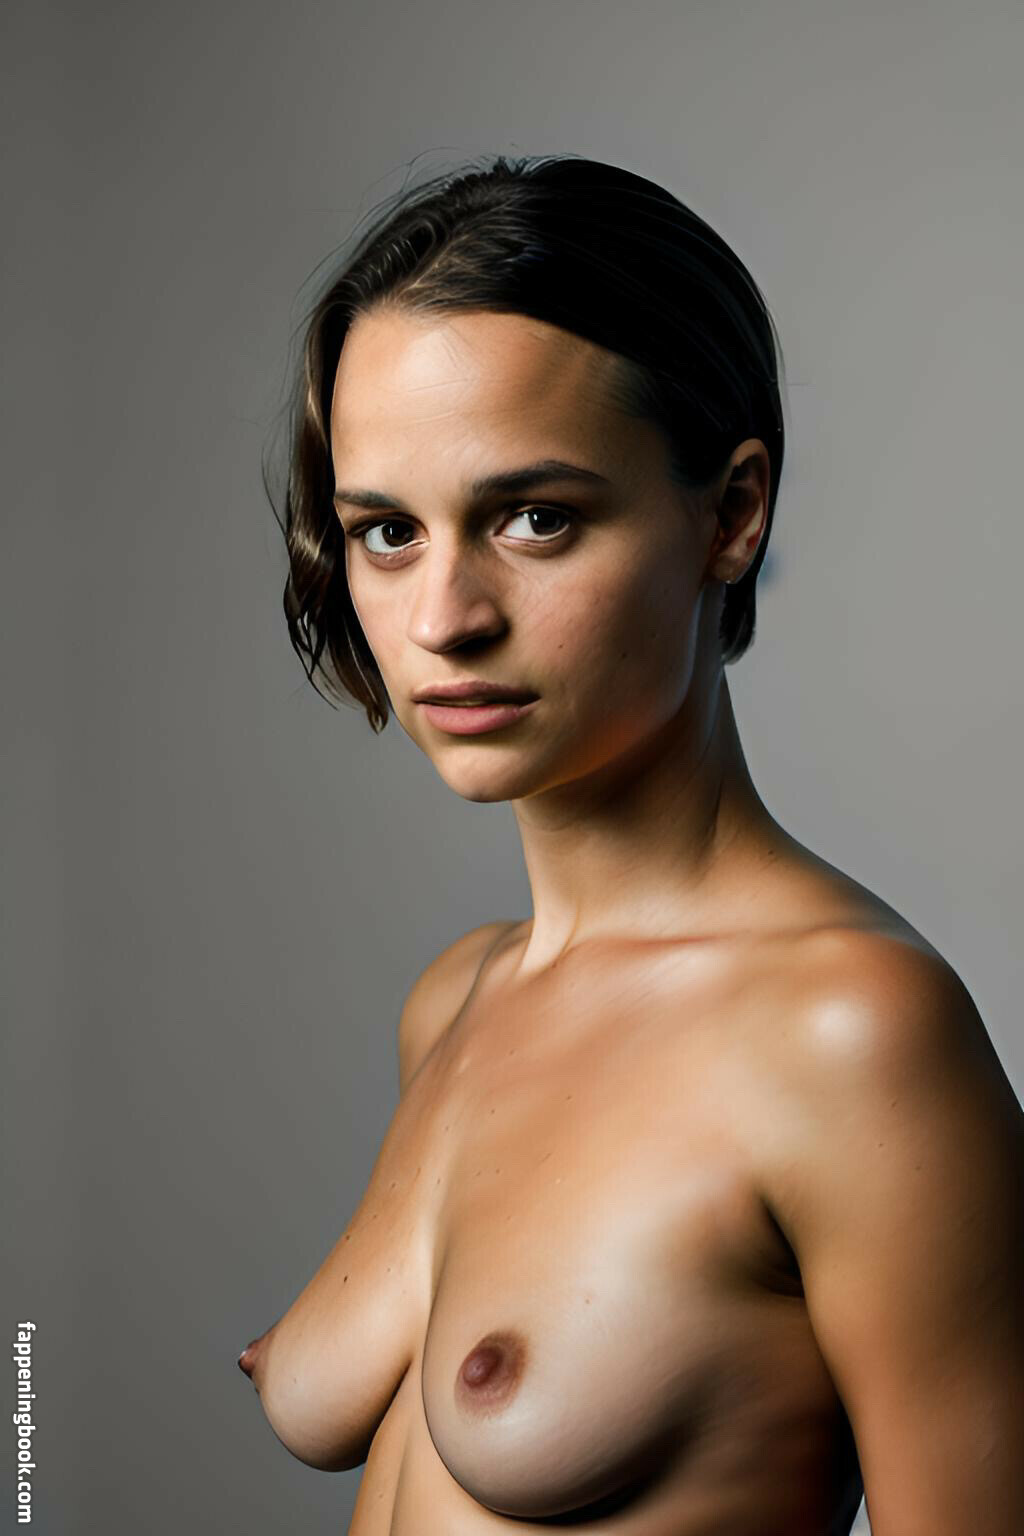 https://fappeningbook.com/photos/a/i/ai-generated-celebrity-nudes/1000/221.jpg